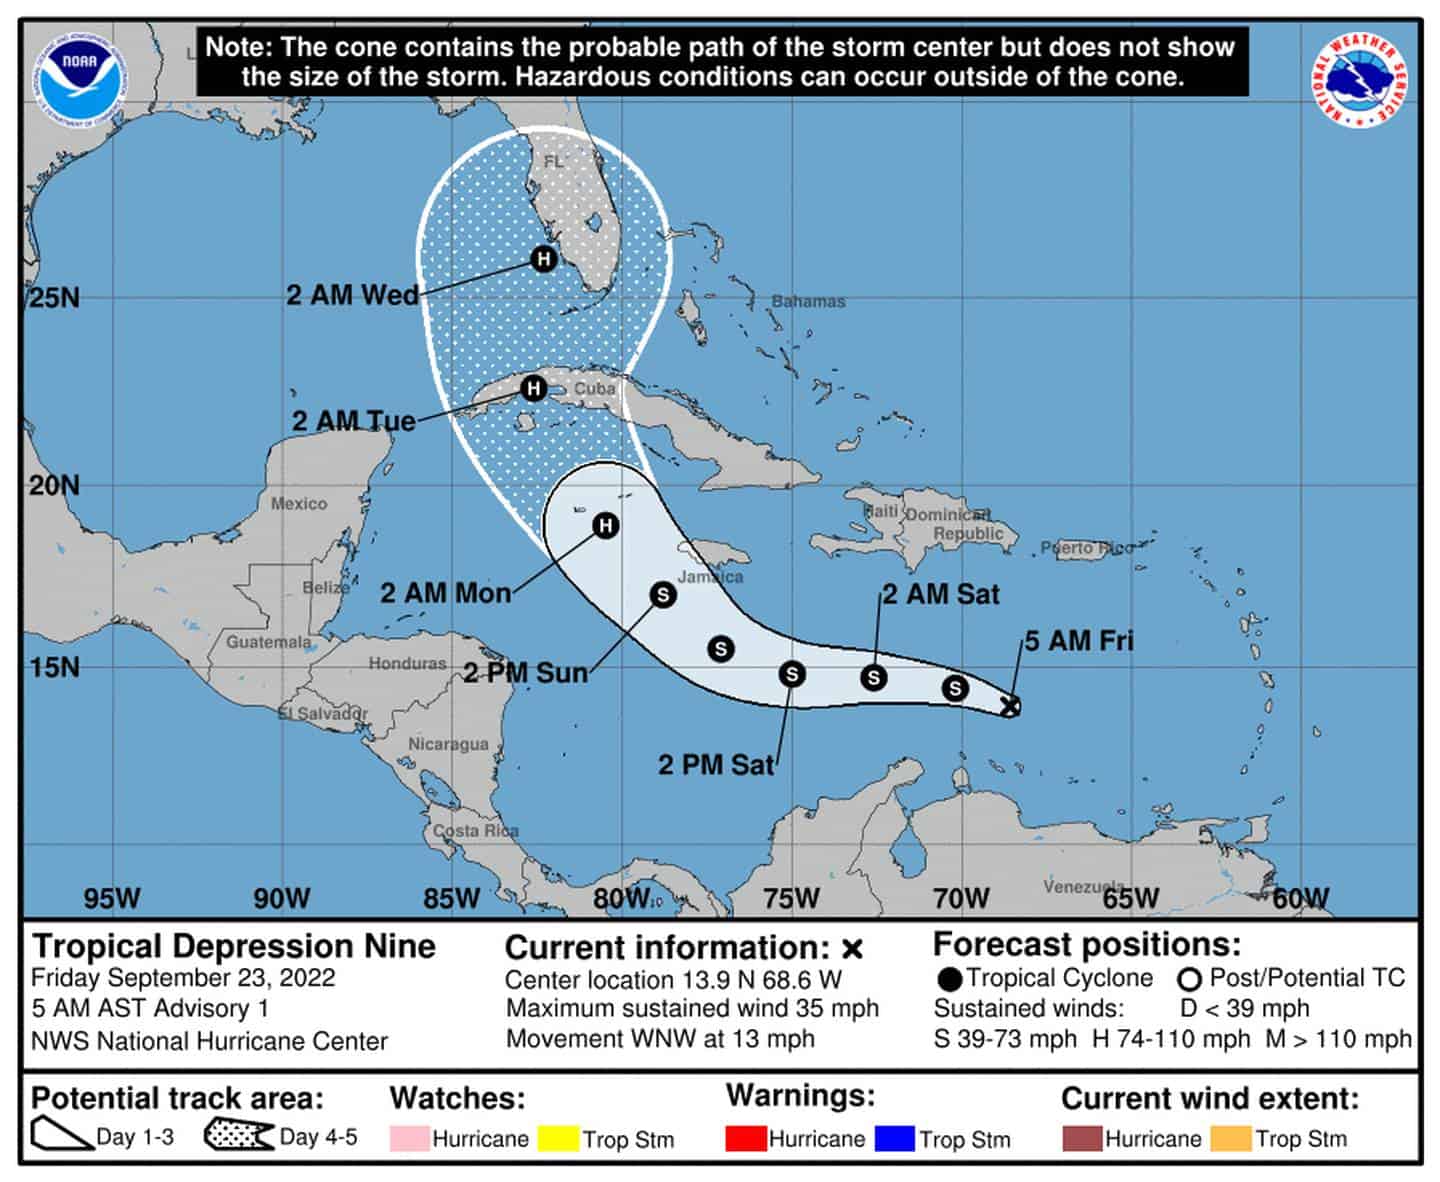 Tropical Depression 9 Probable Storm Path